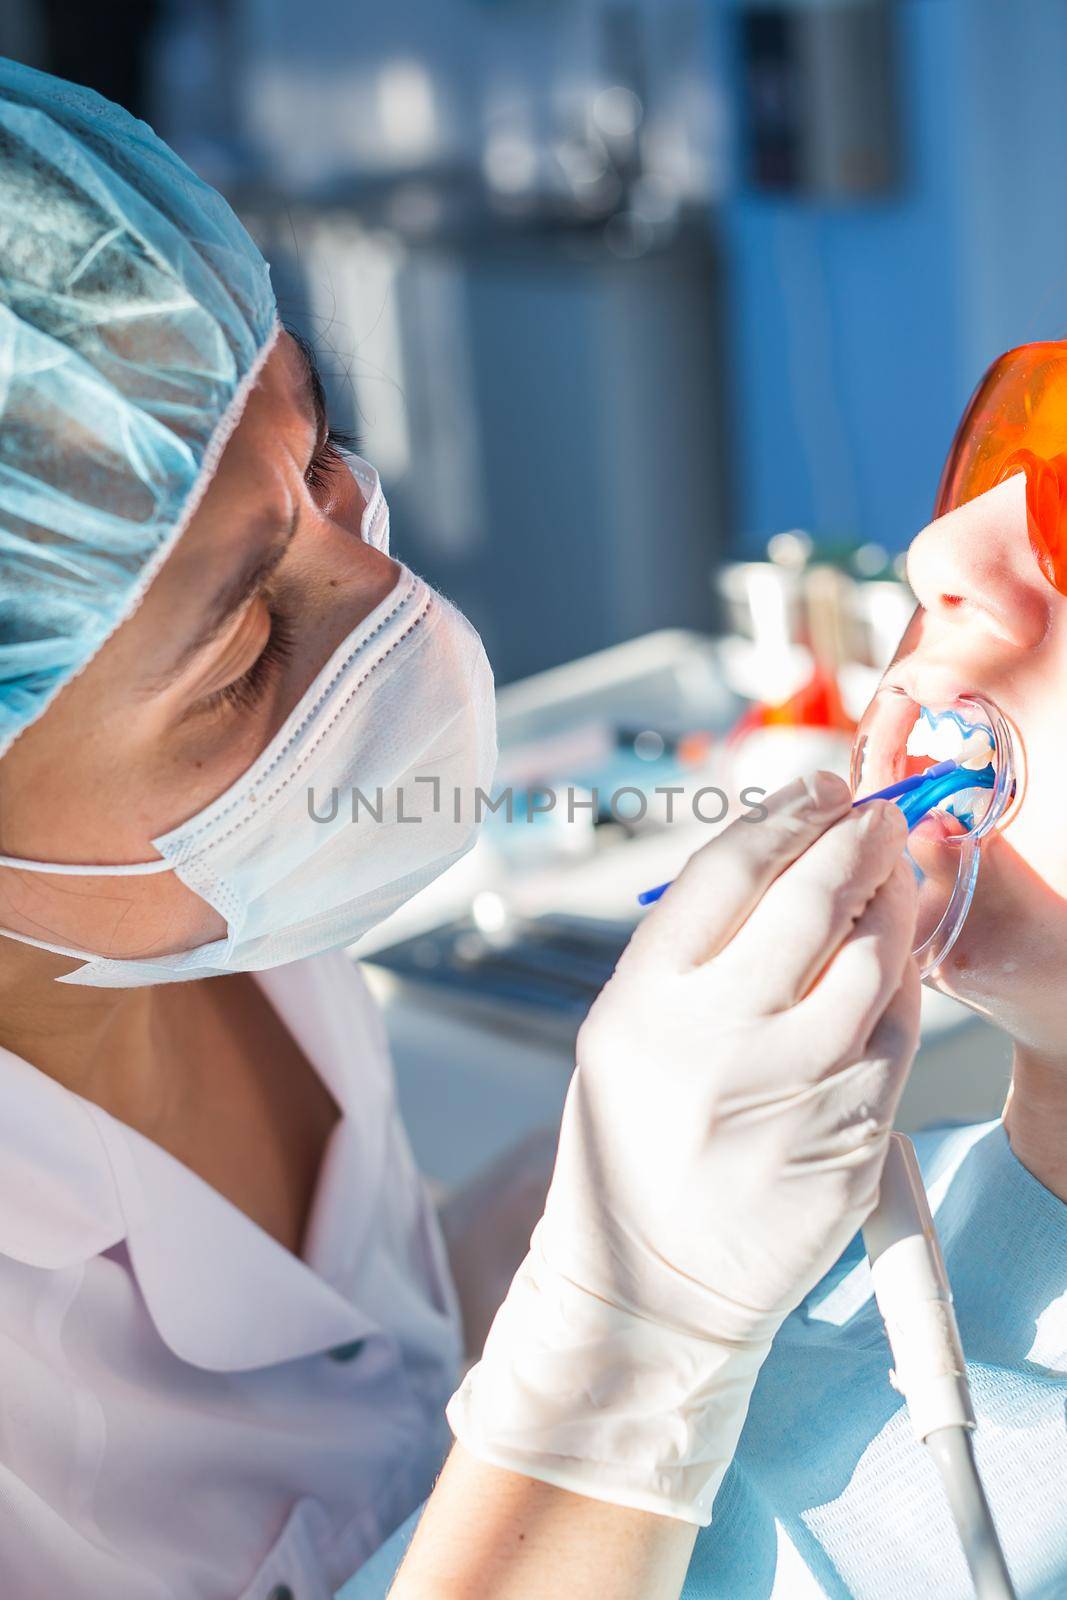 Teeth whitening procedure in the dental clinic